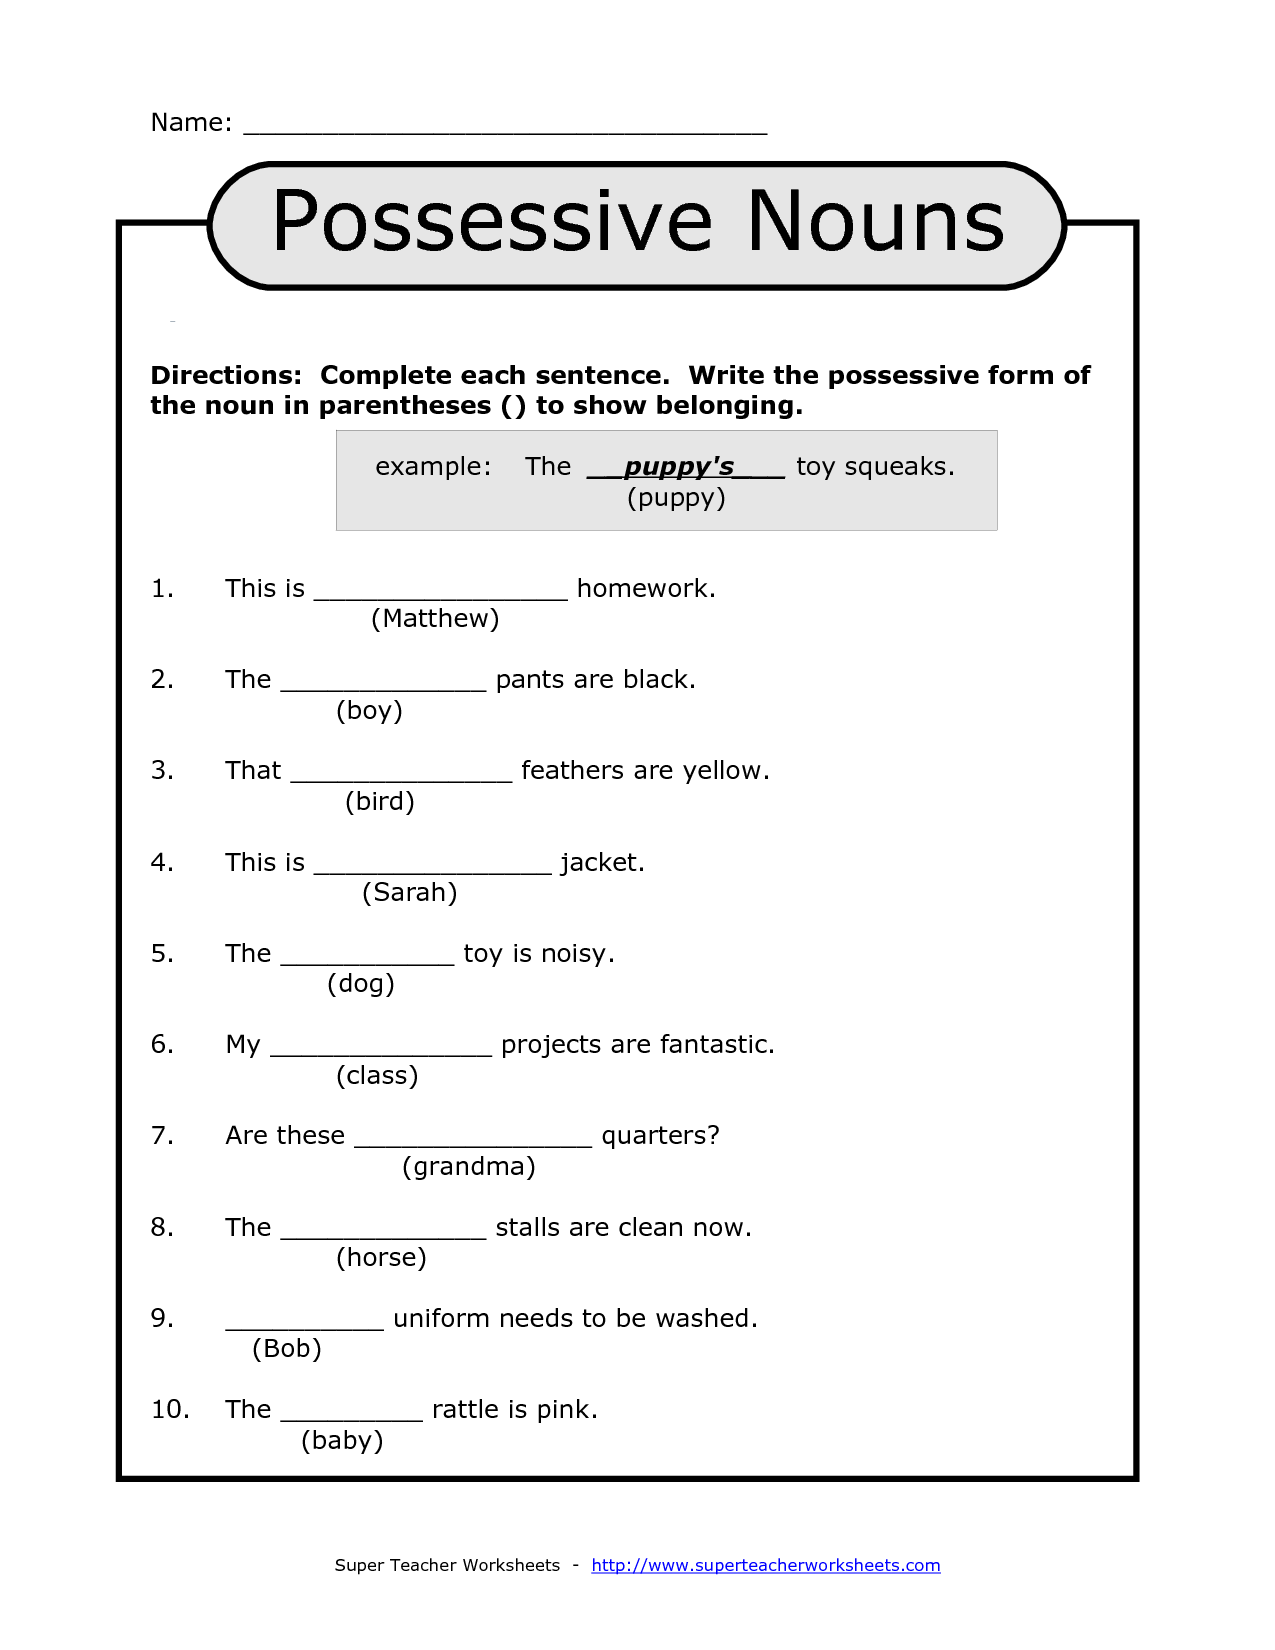 possessive nouns worksheet education.com